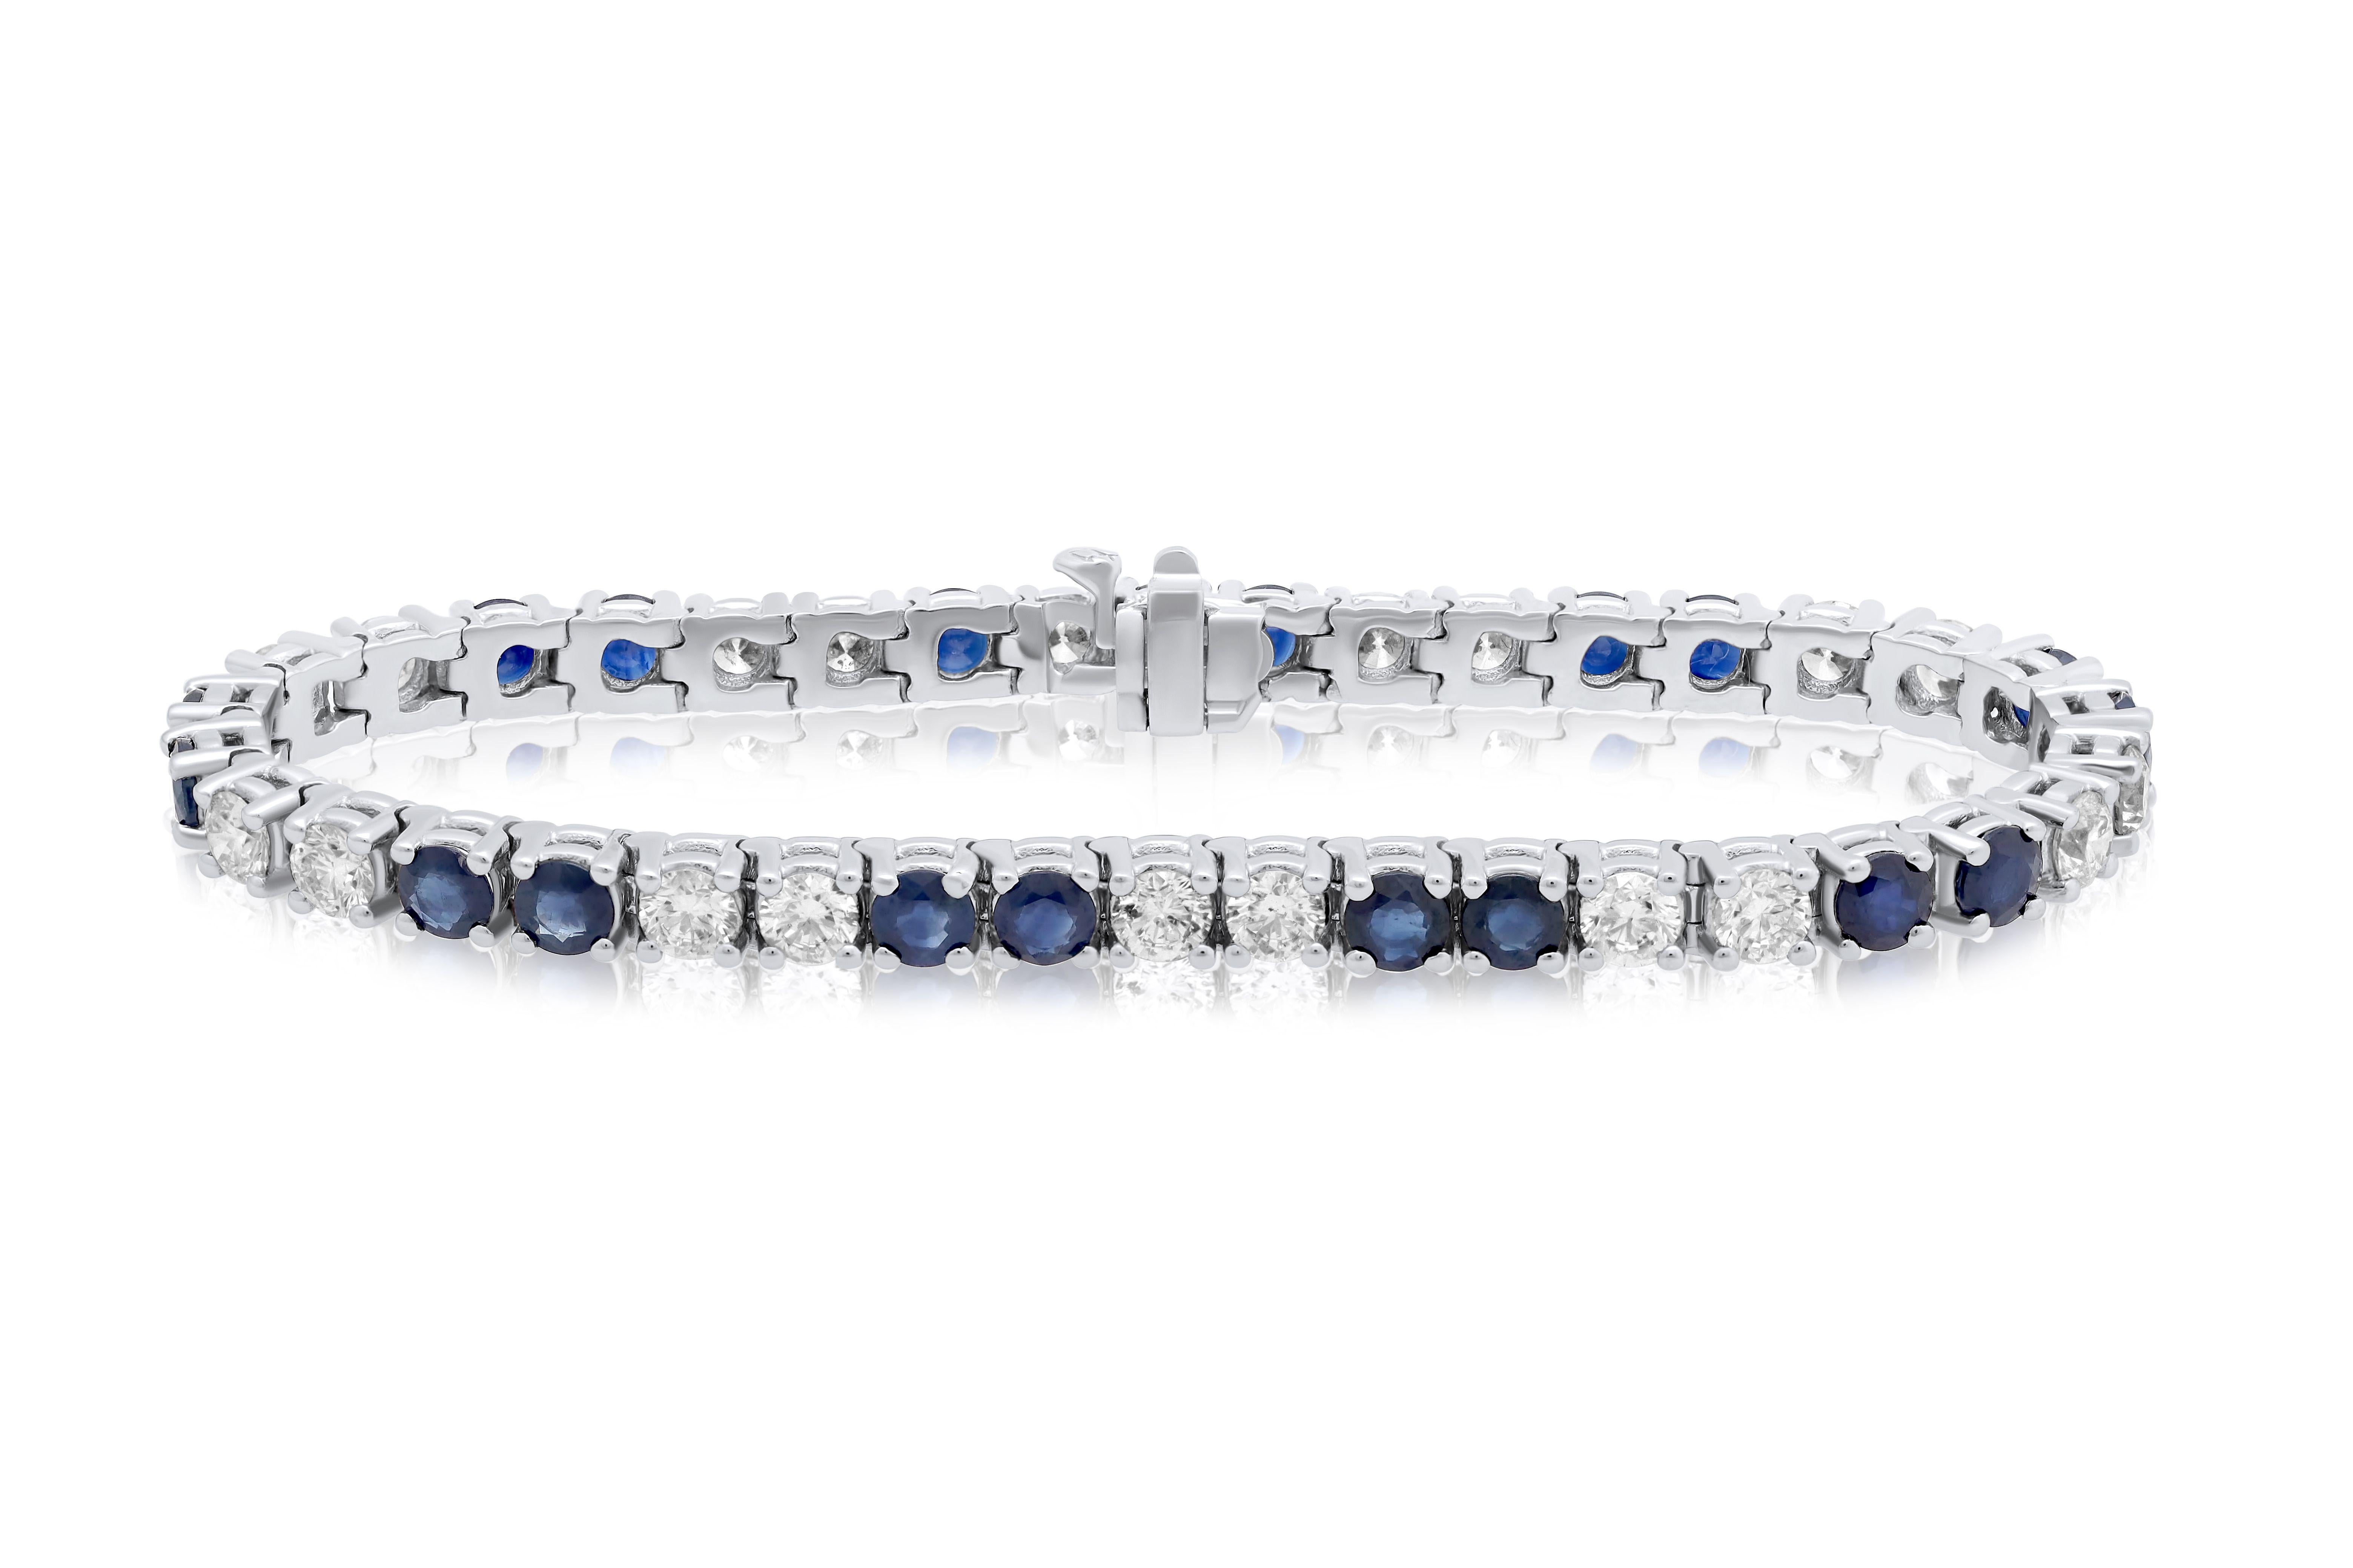 Diamond and sapphire bracelet alternating between 2 round diamonds and 2 round sapphires